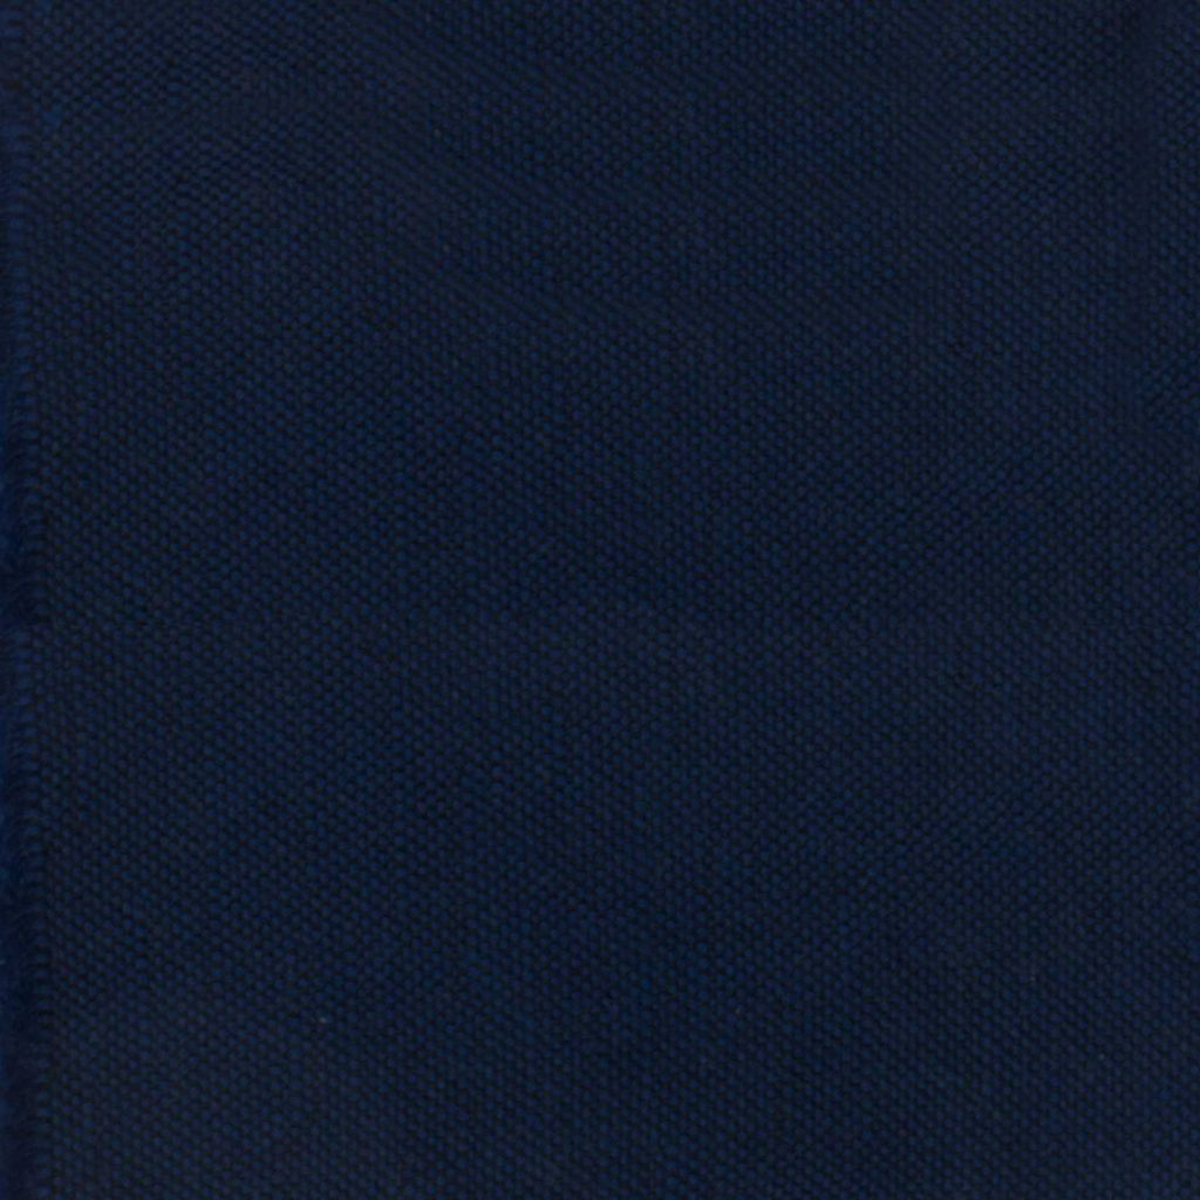 linen indigo cushion for croquet teak ottoman product image